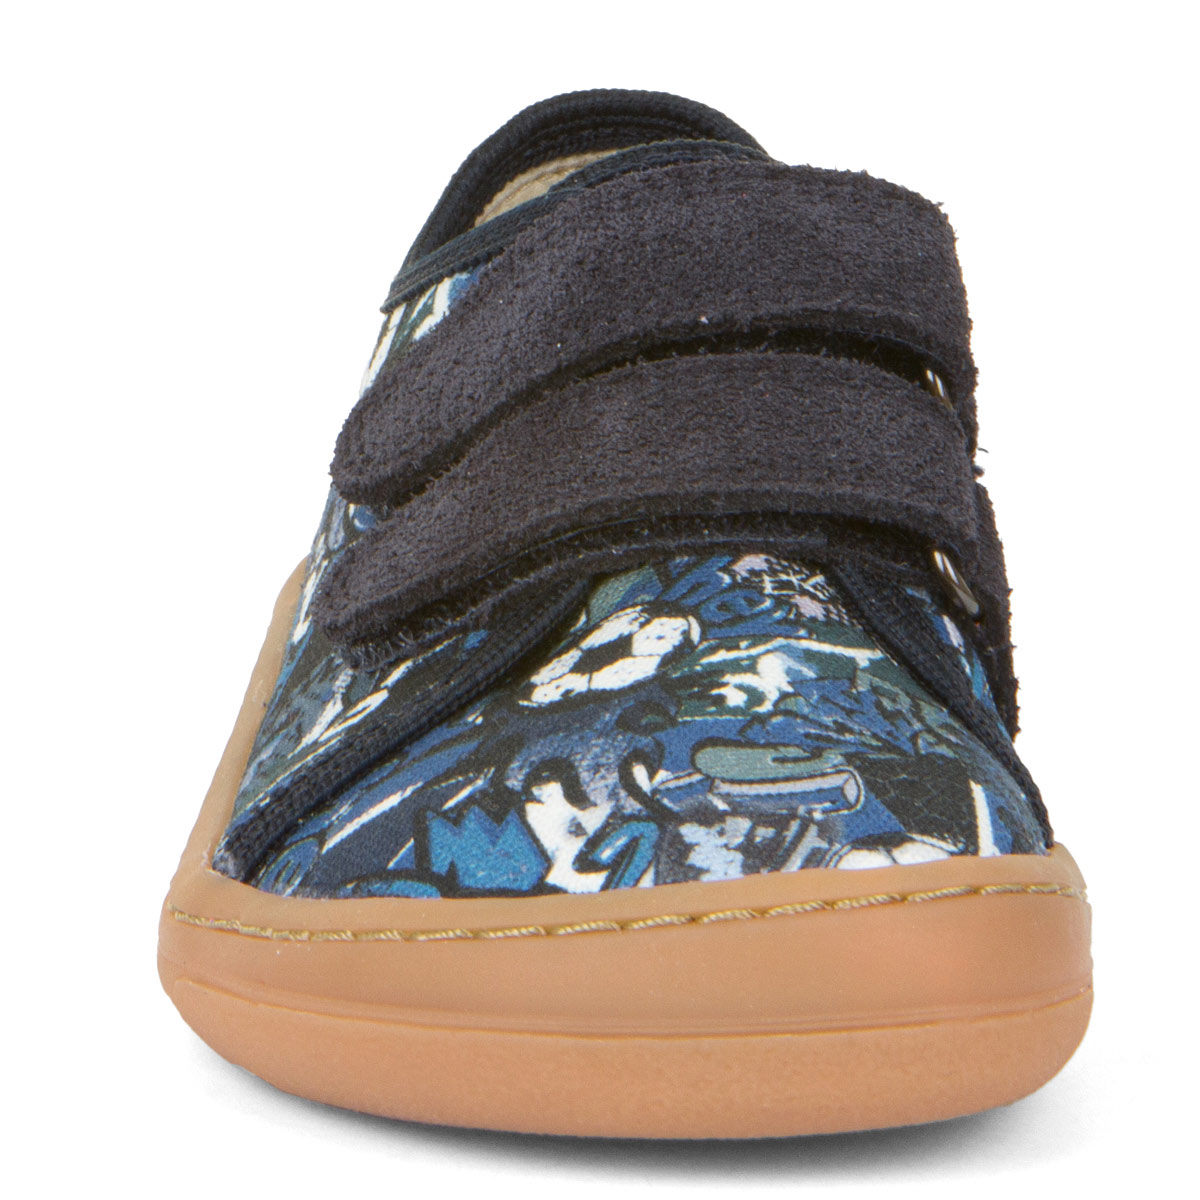 Barefoot Sneaker-Canvas blue sports